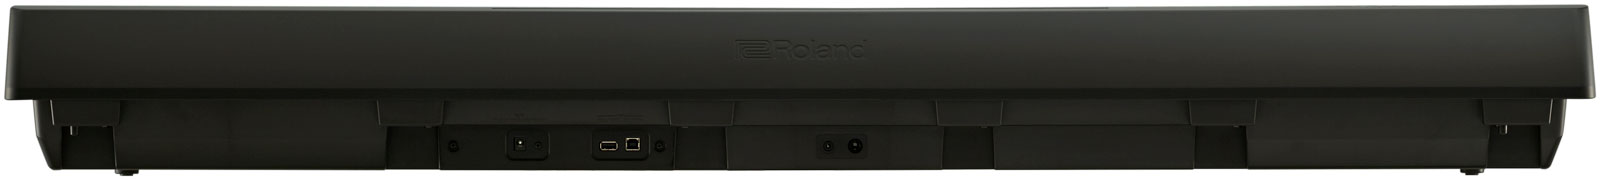 Roland FP-10-BK Digital Piano Black